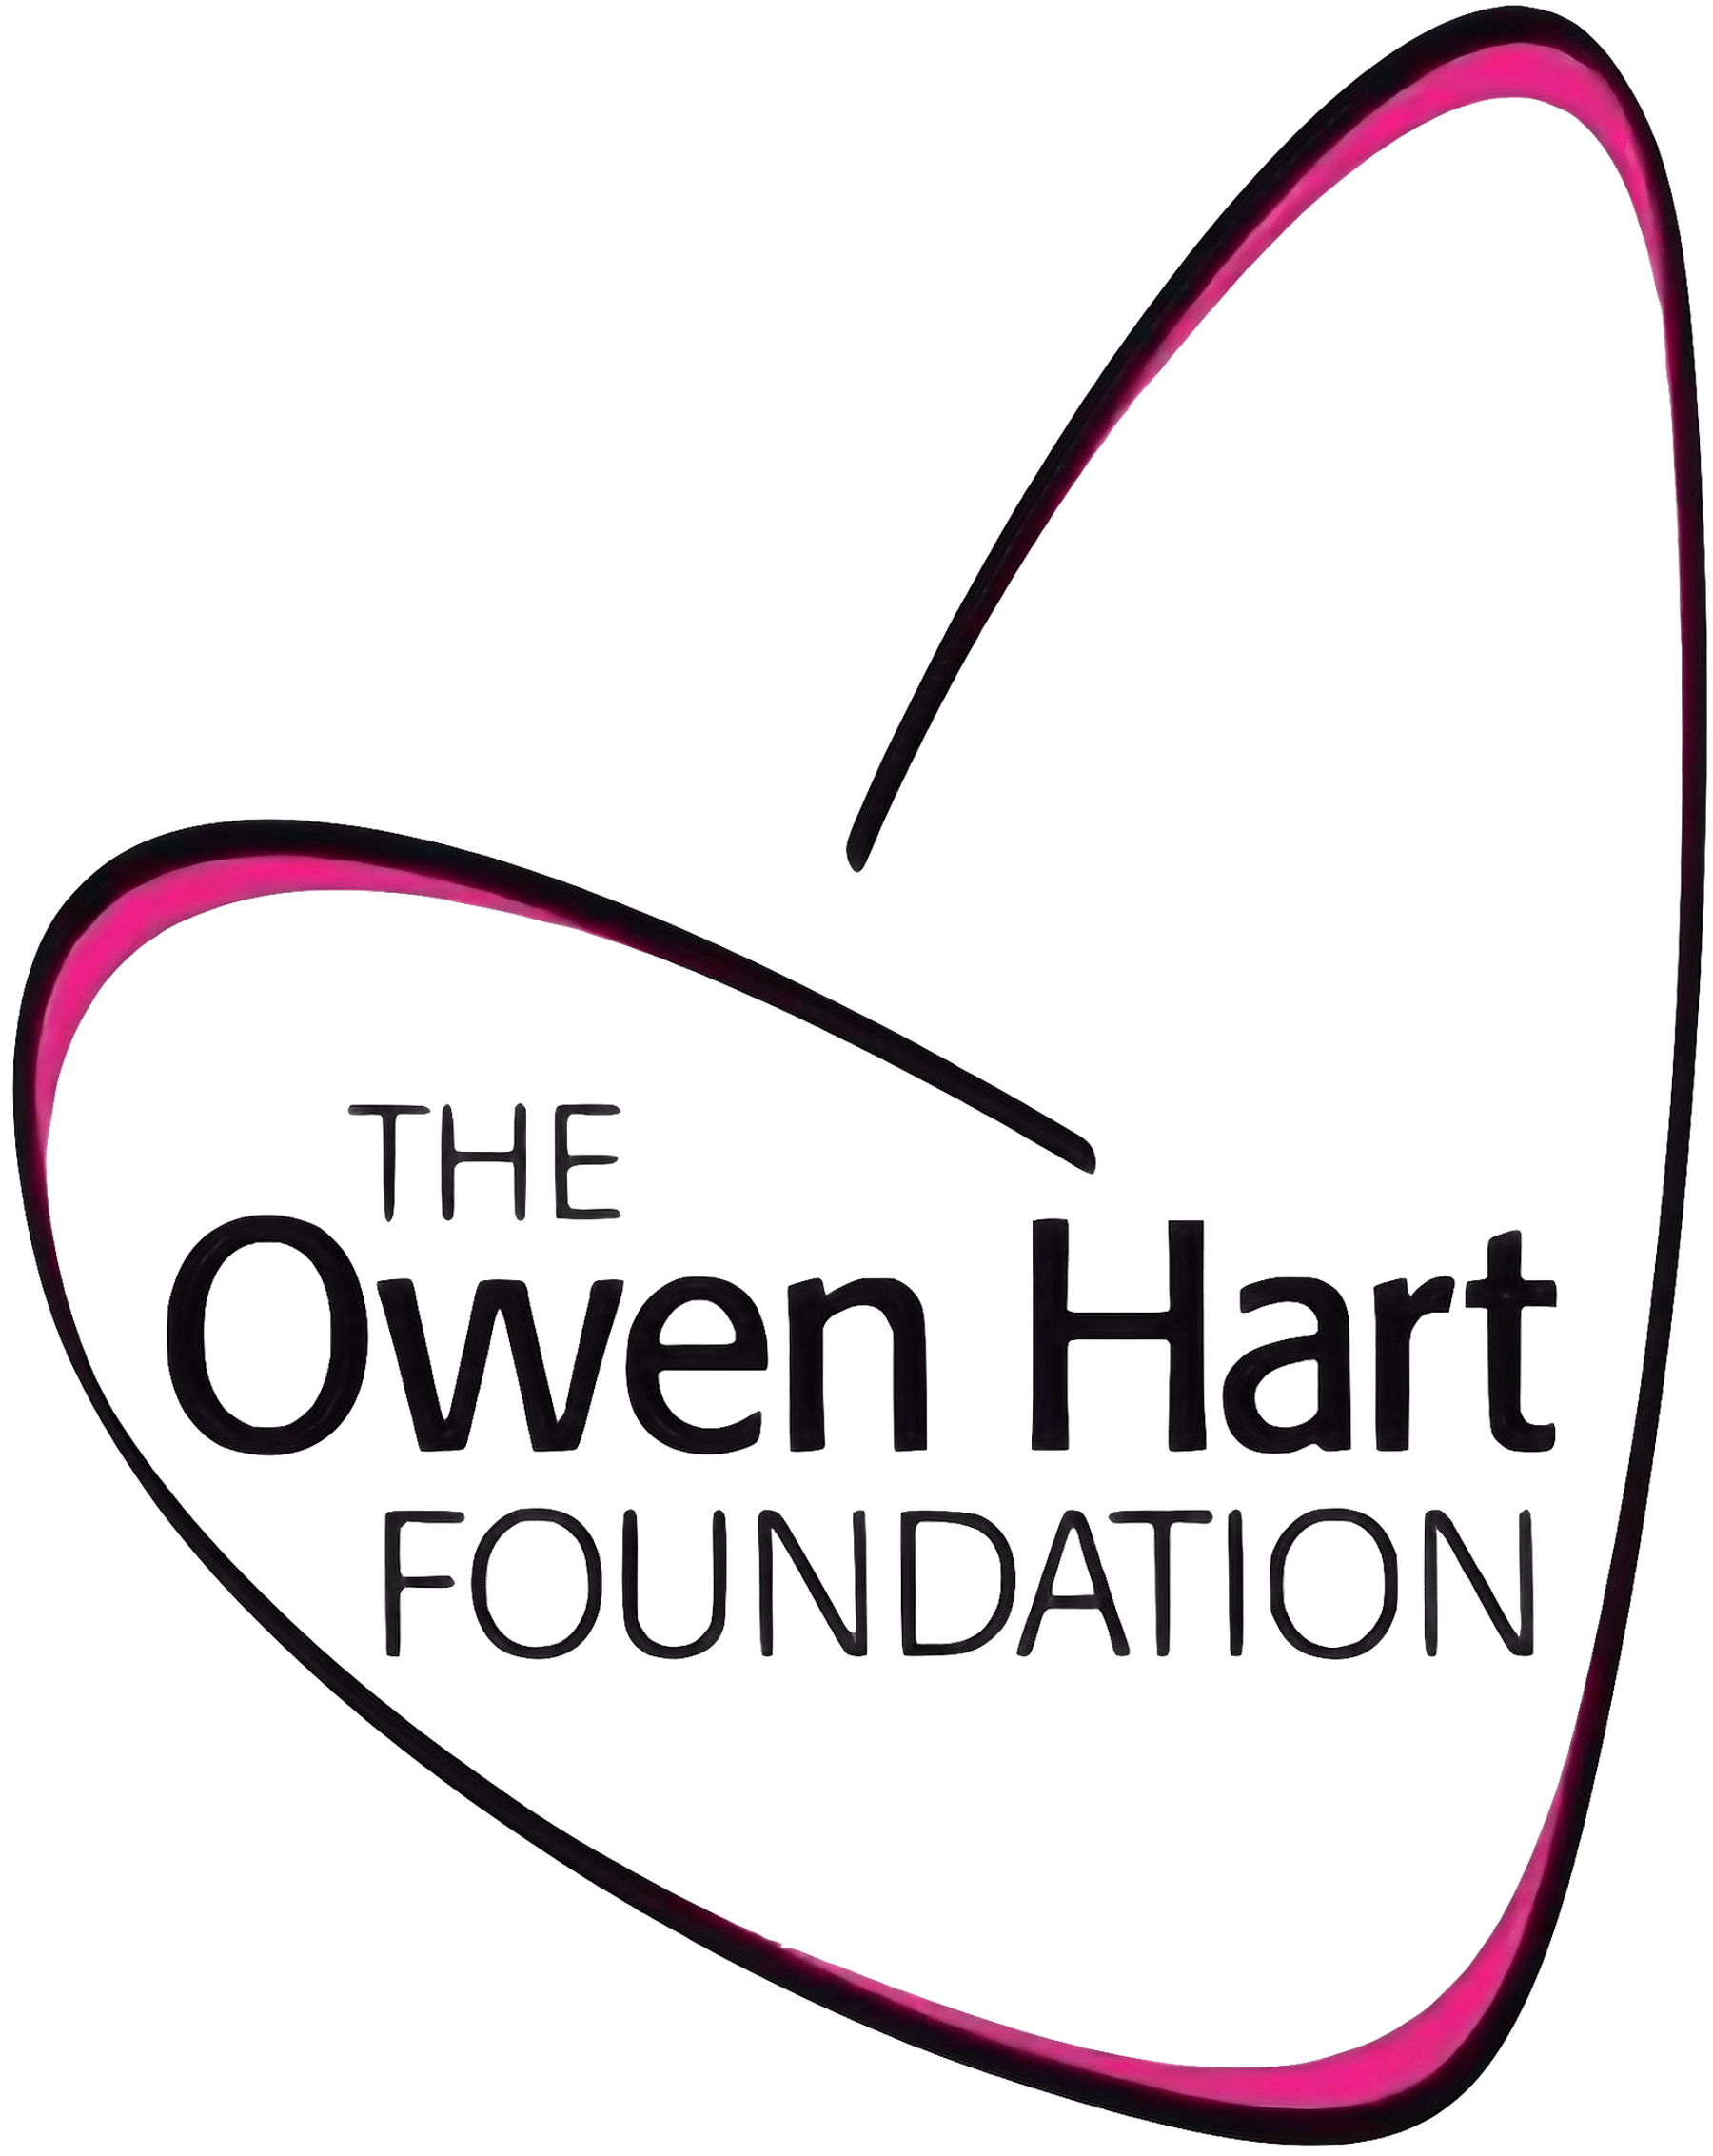 Owen Hart Foundation logo on a transparent background